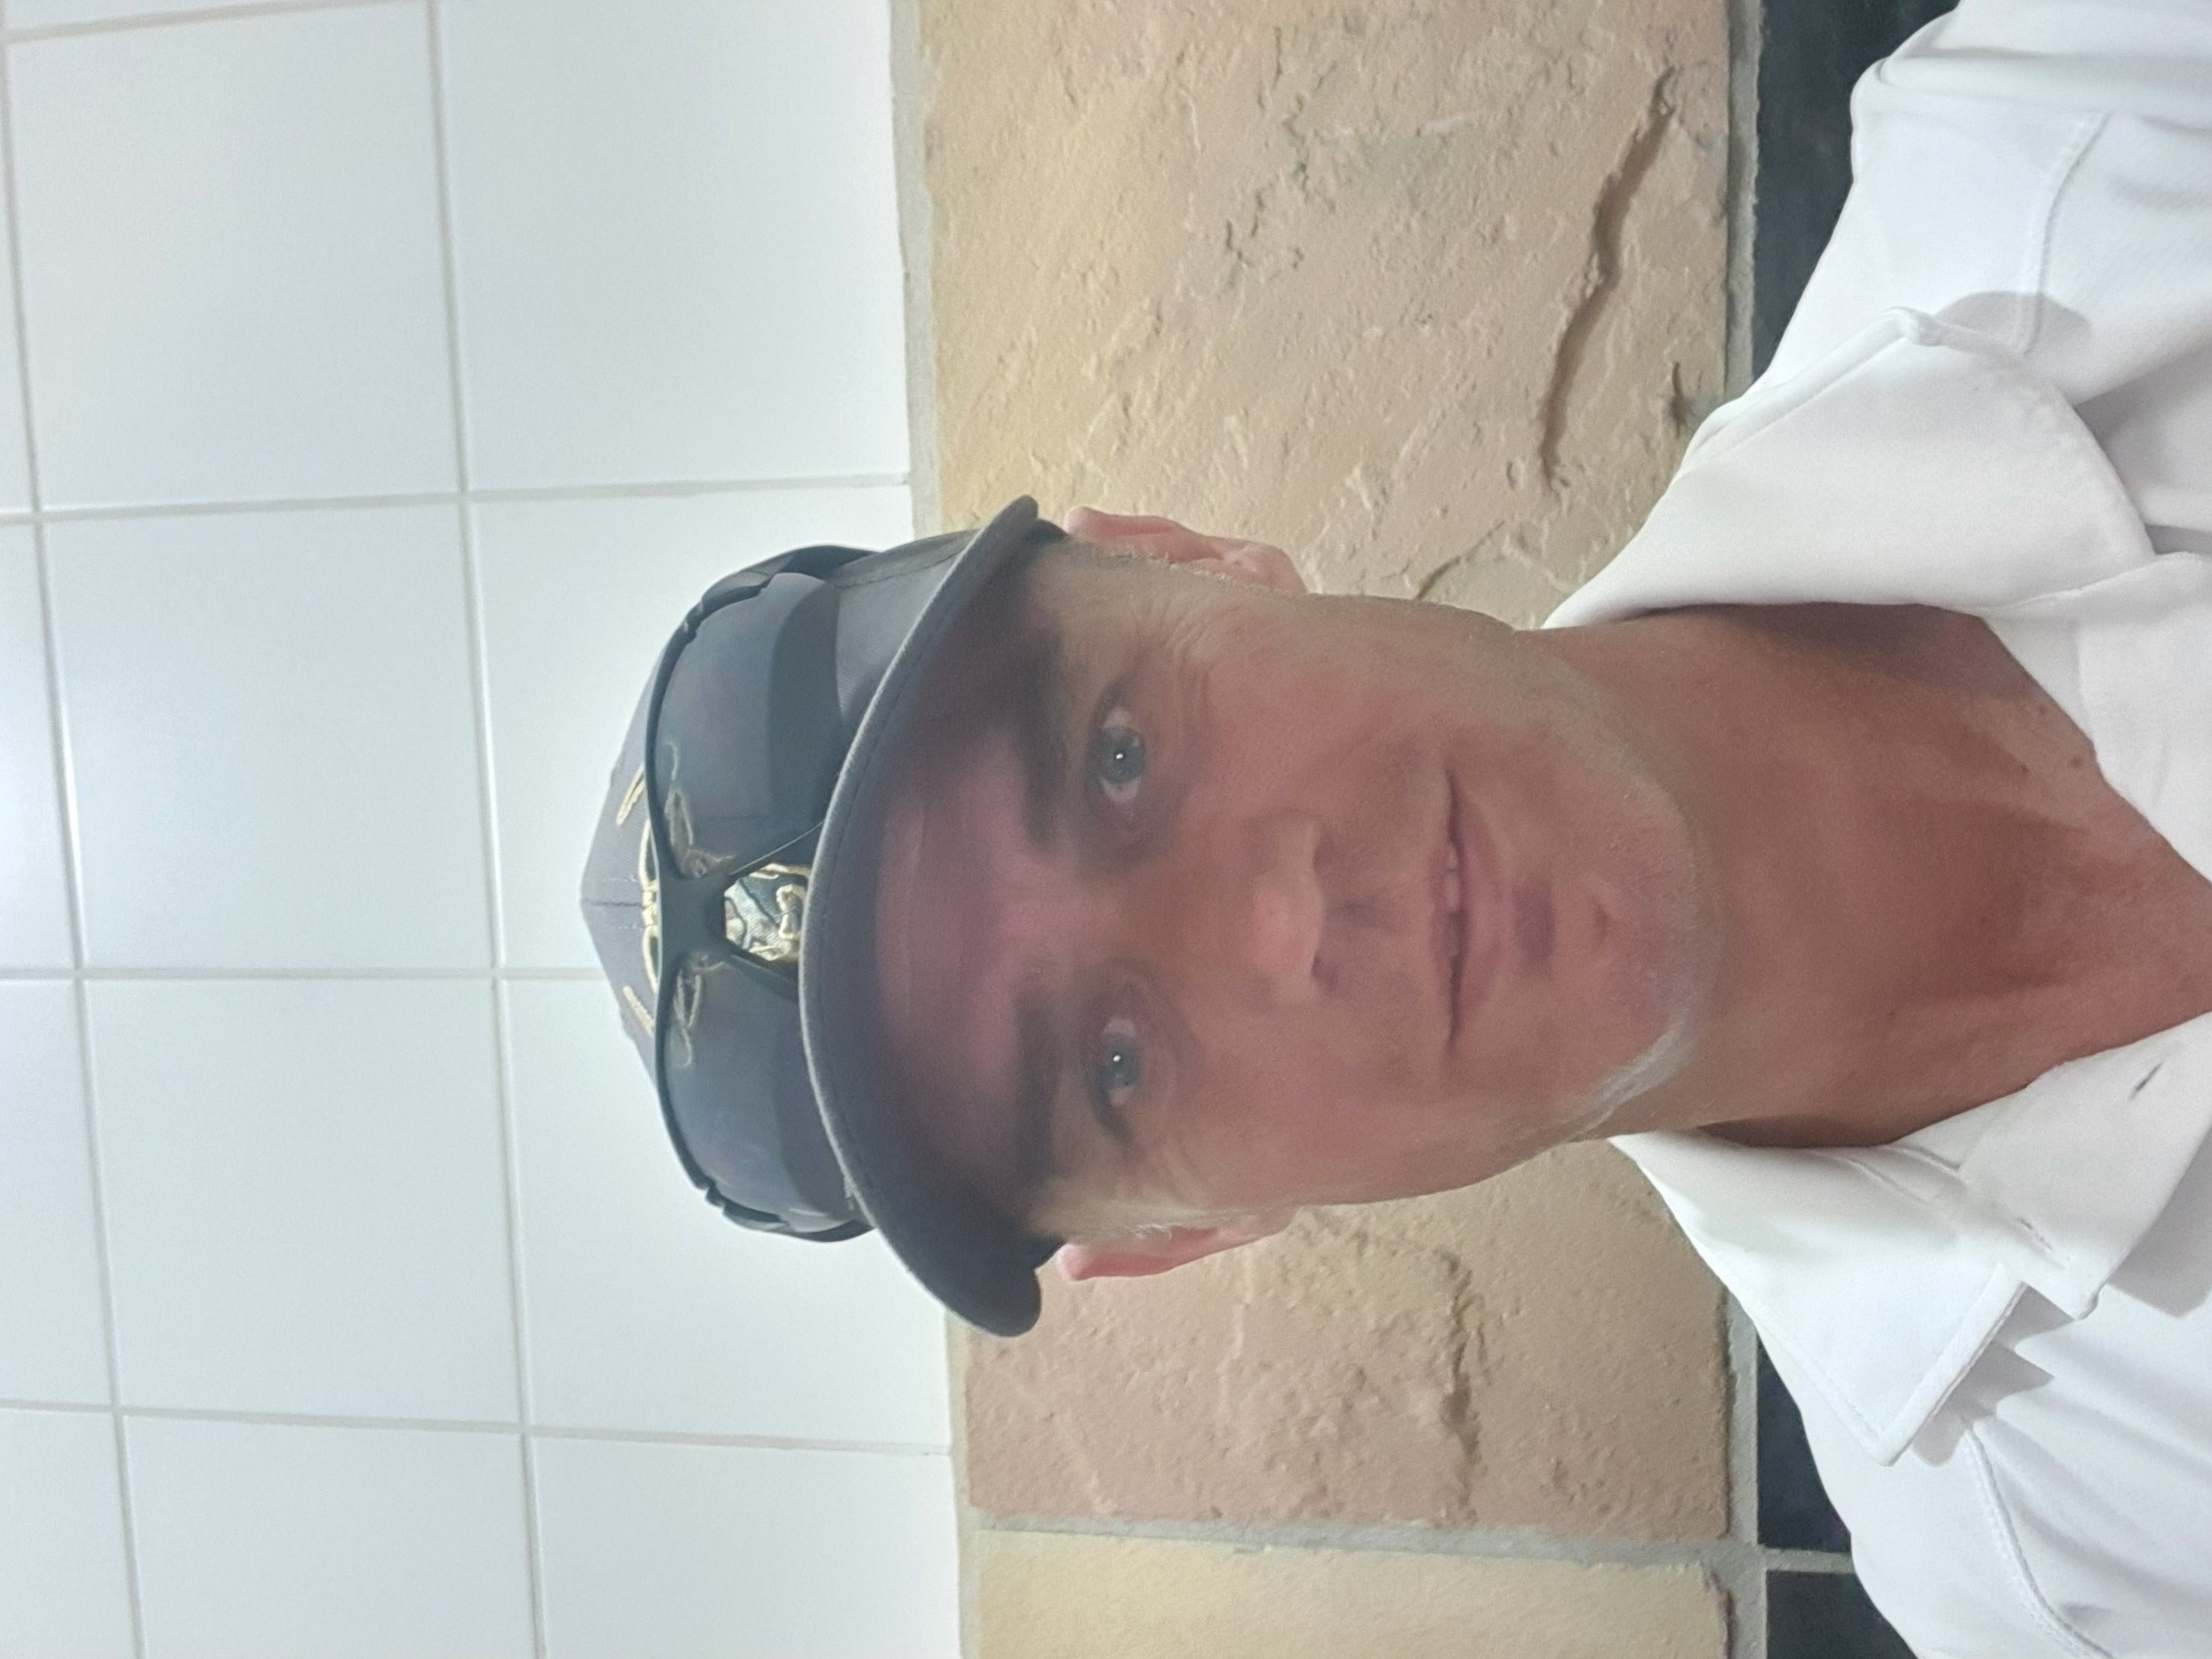 Pieter Steenkamp